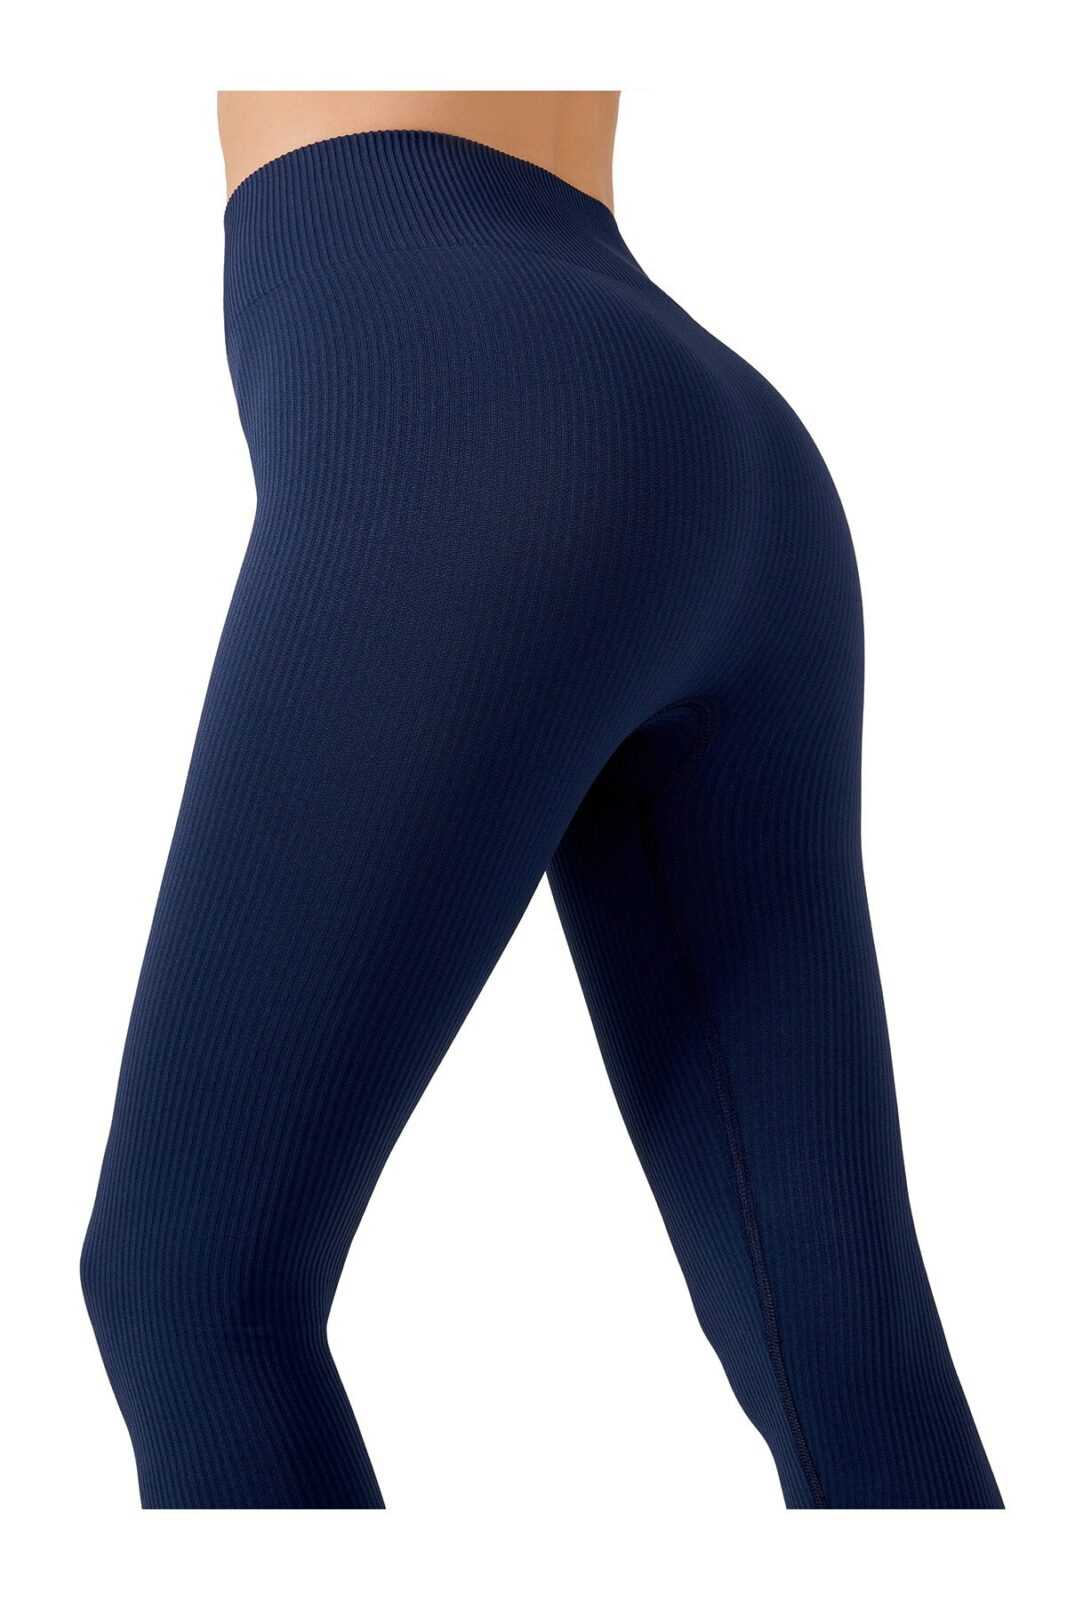 LOS OJOS Sport-leggings Dunkelblau Hoher Bund für Damen - L/XL